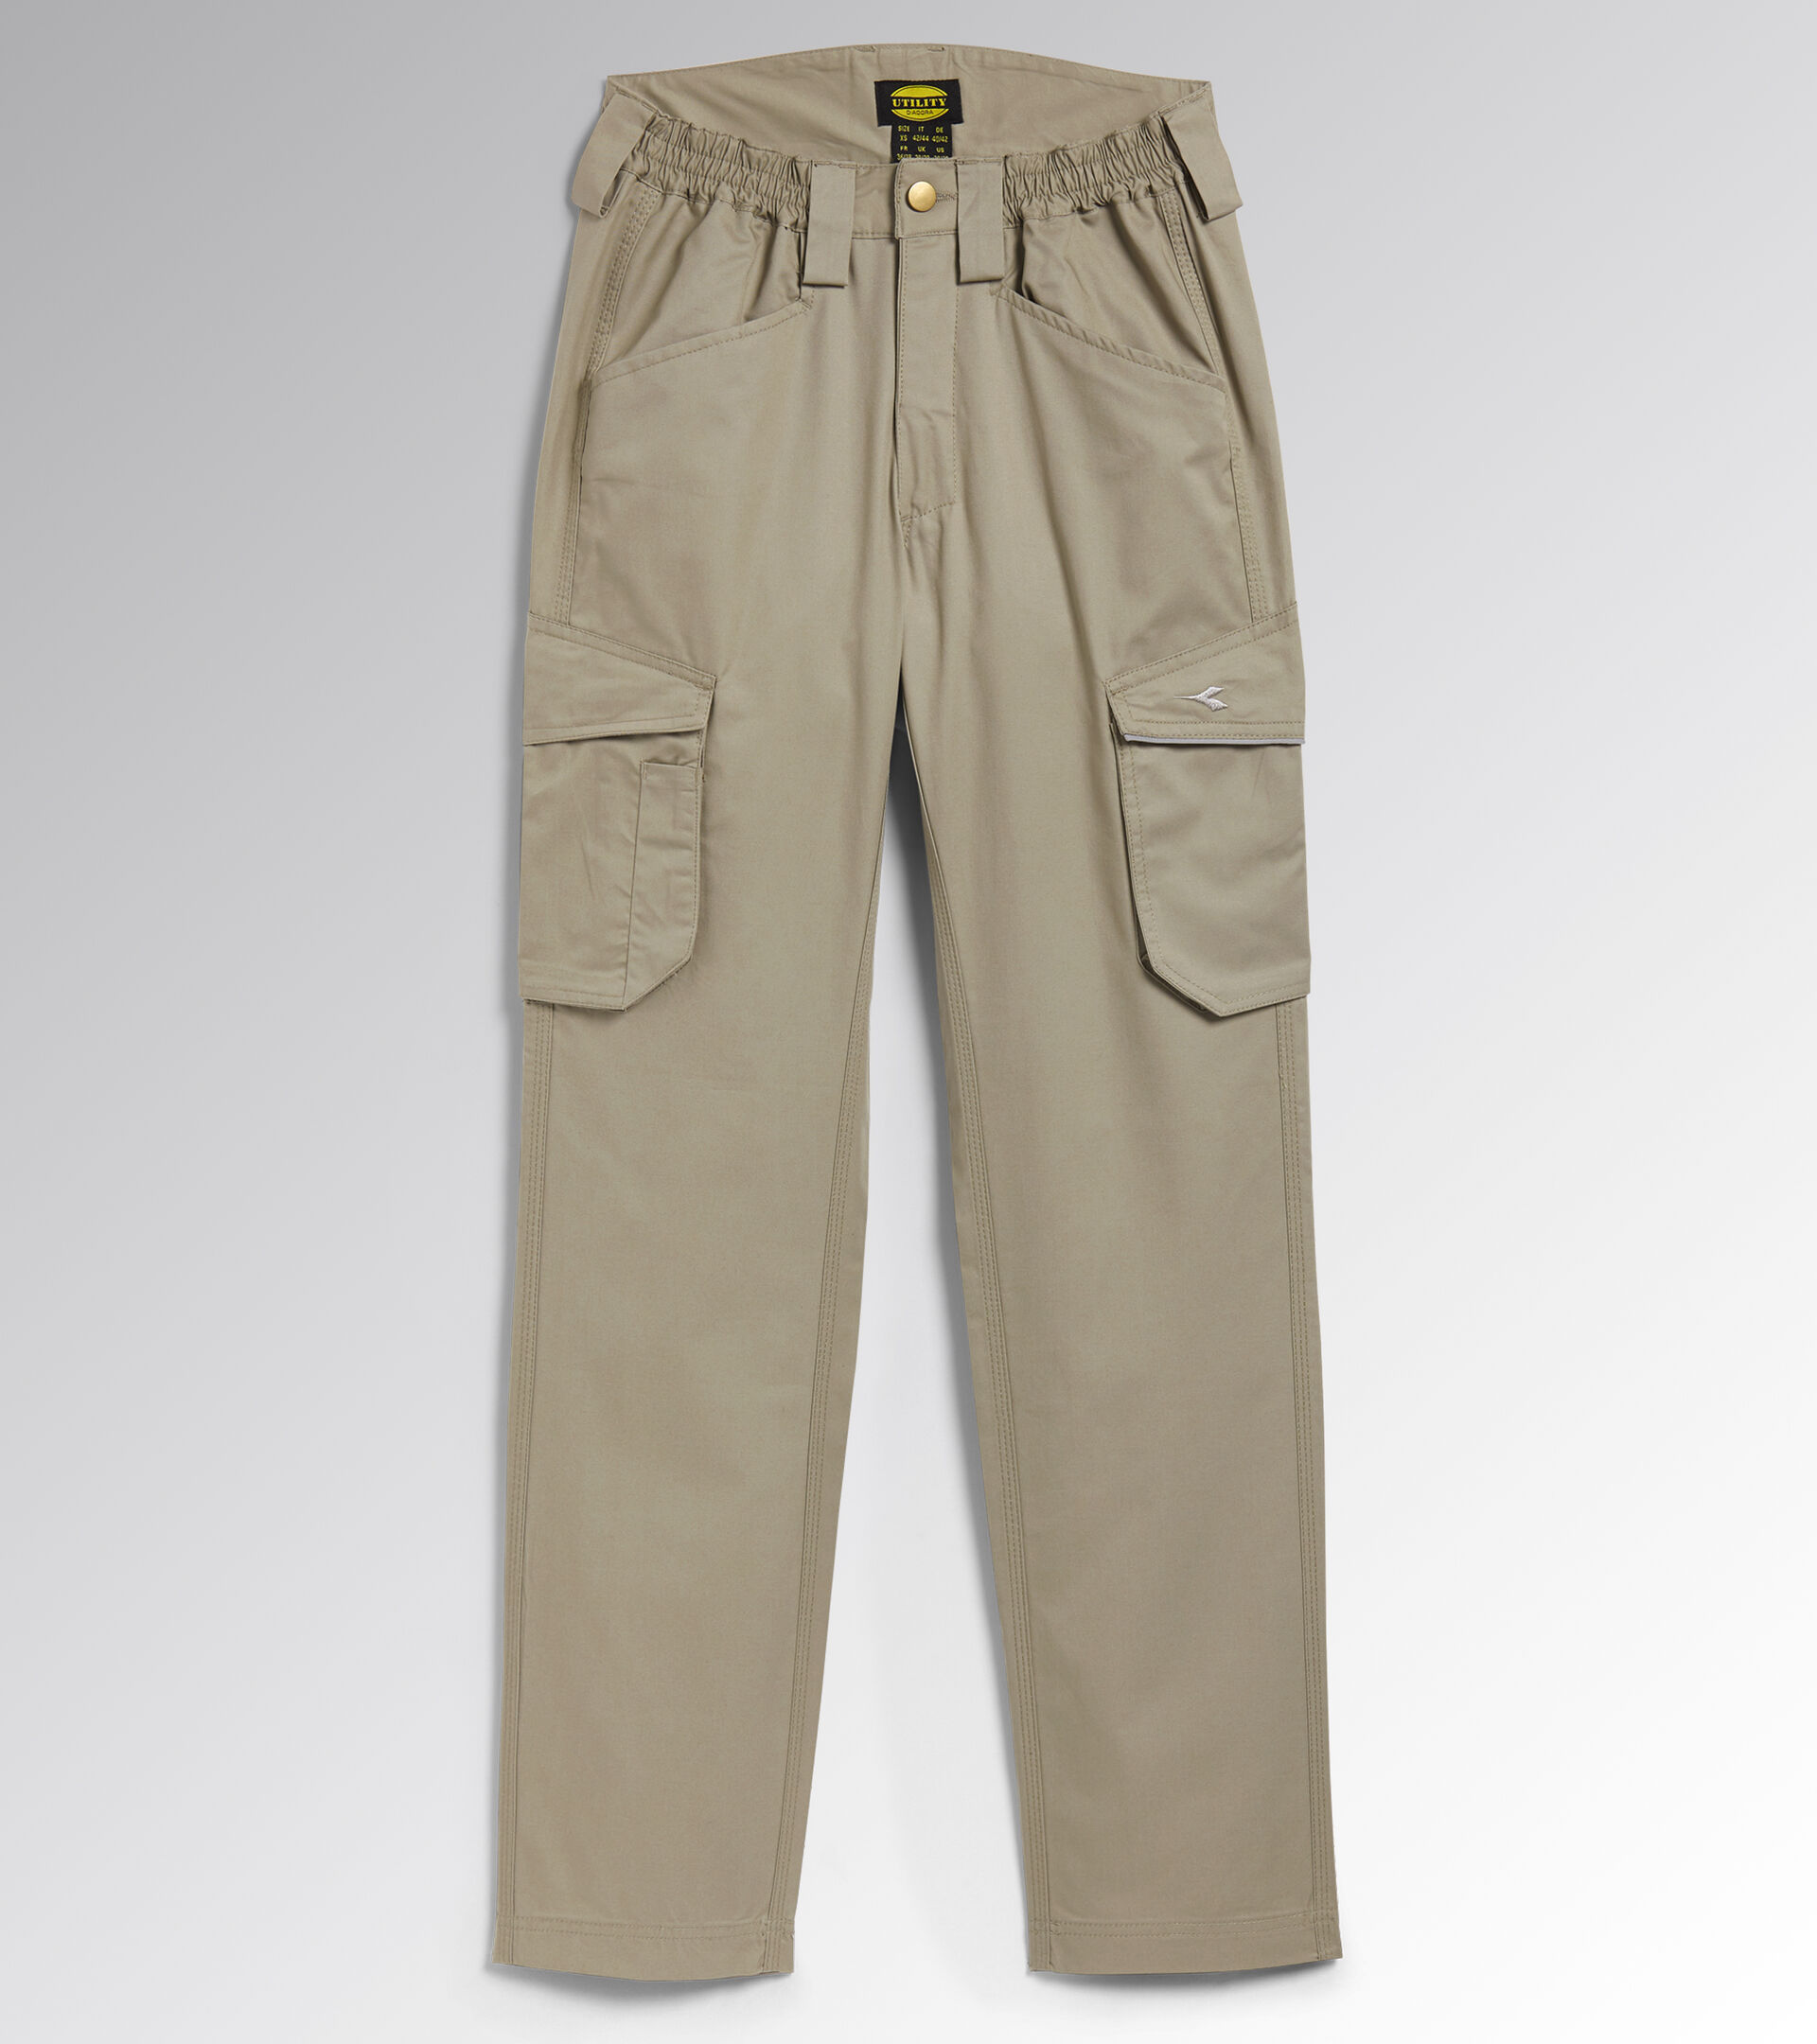 Work trousers PANT STAFF LIGHT CARGO COTTON GREY HEMP - Utility